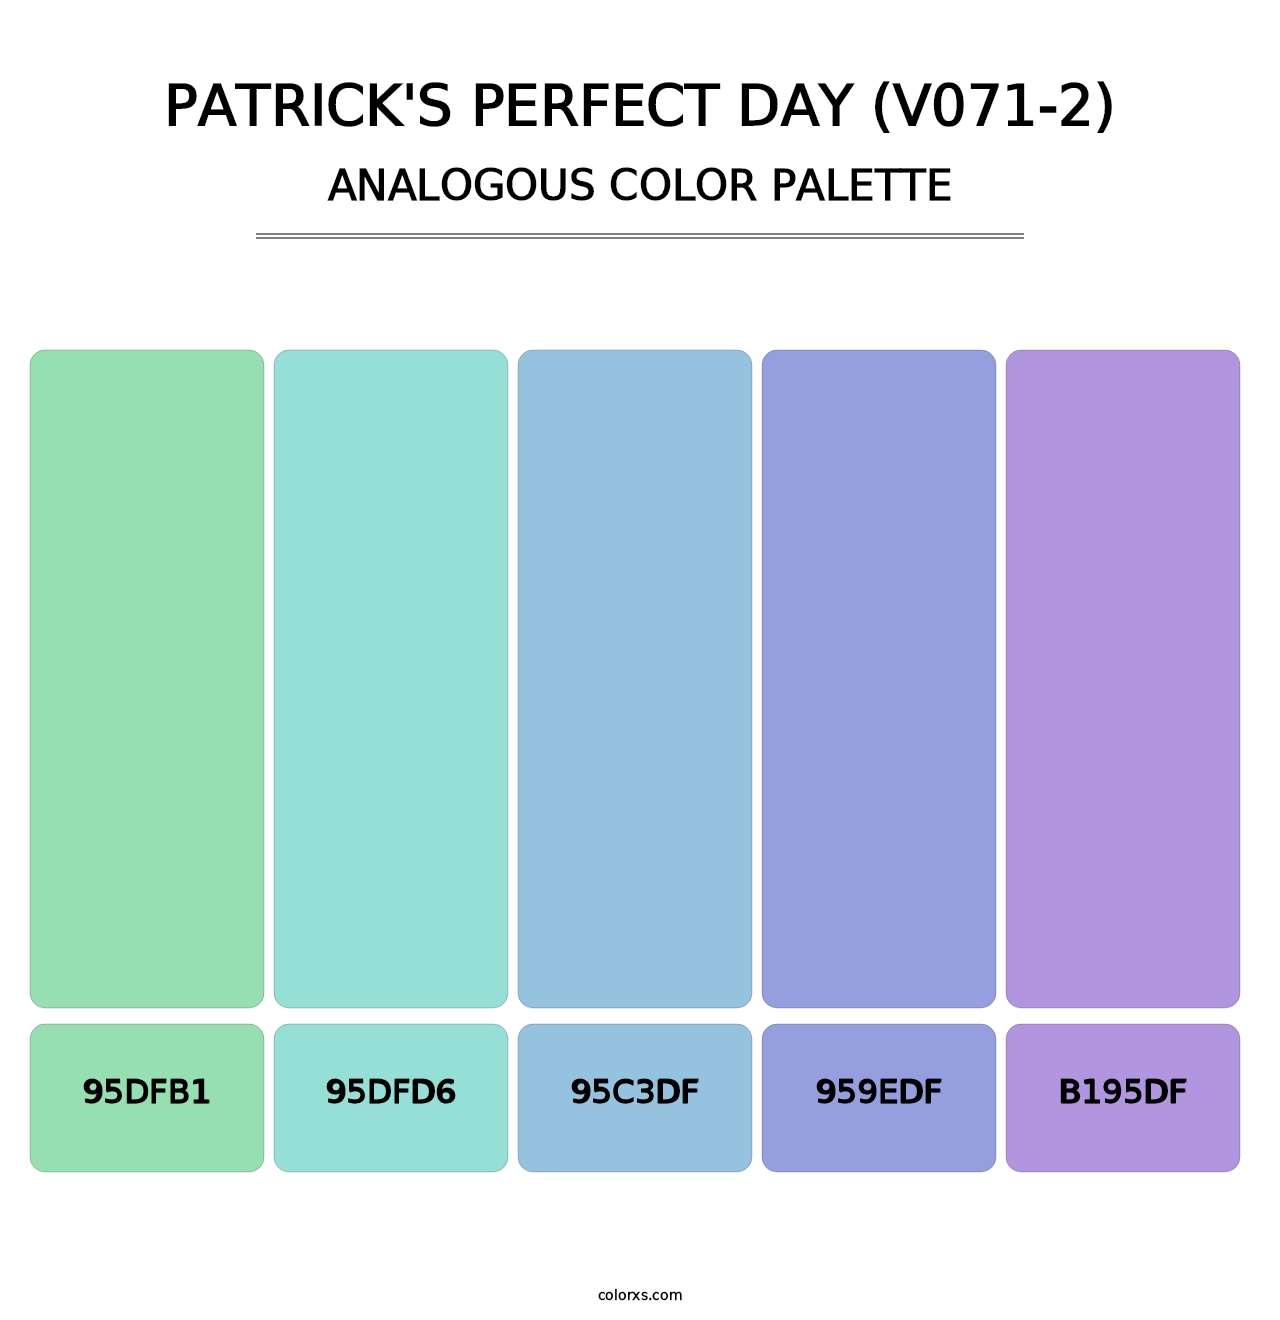 Patrick's Perfect Day (V071-2) - Analogous Color Palette